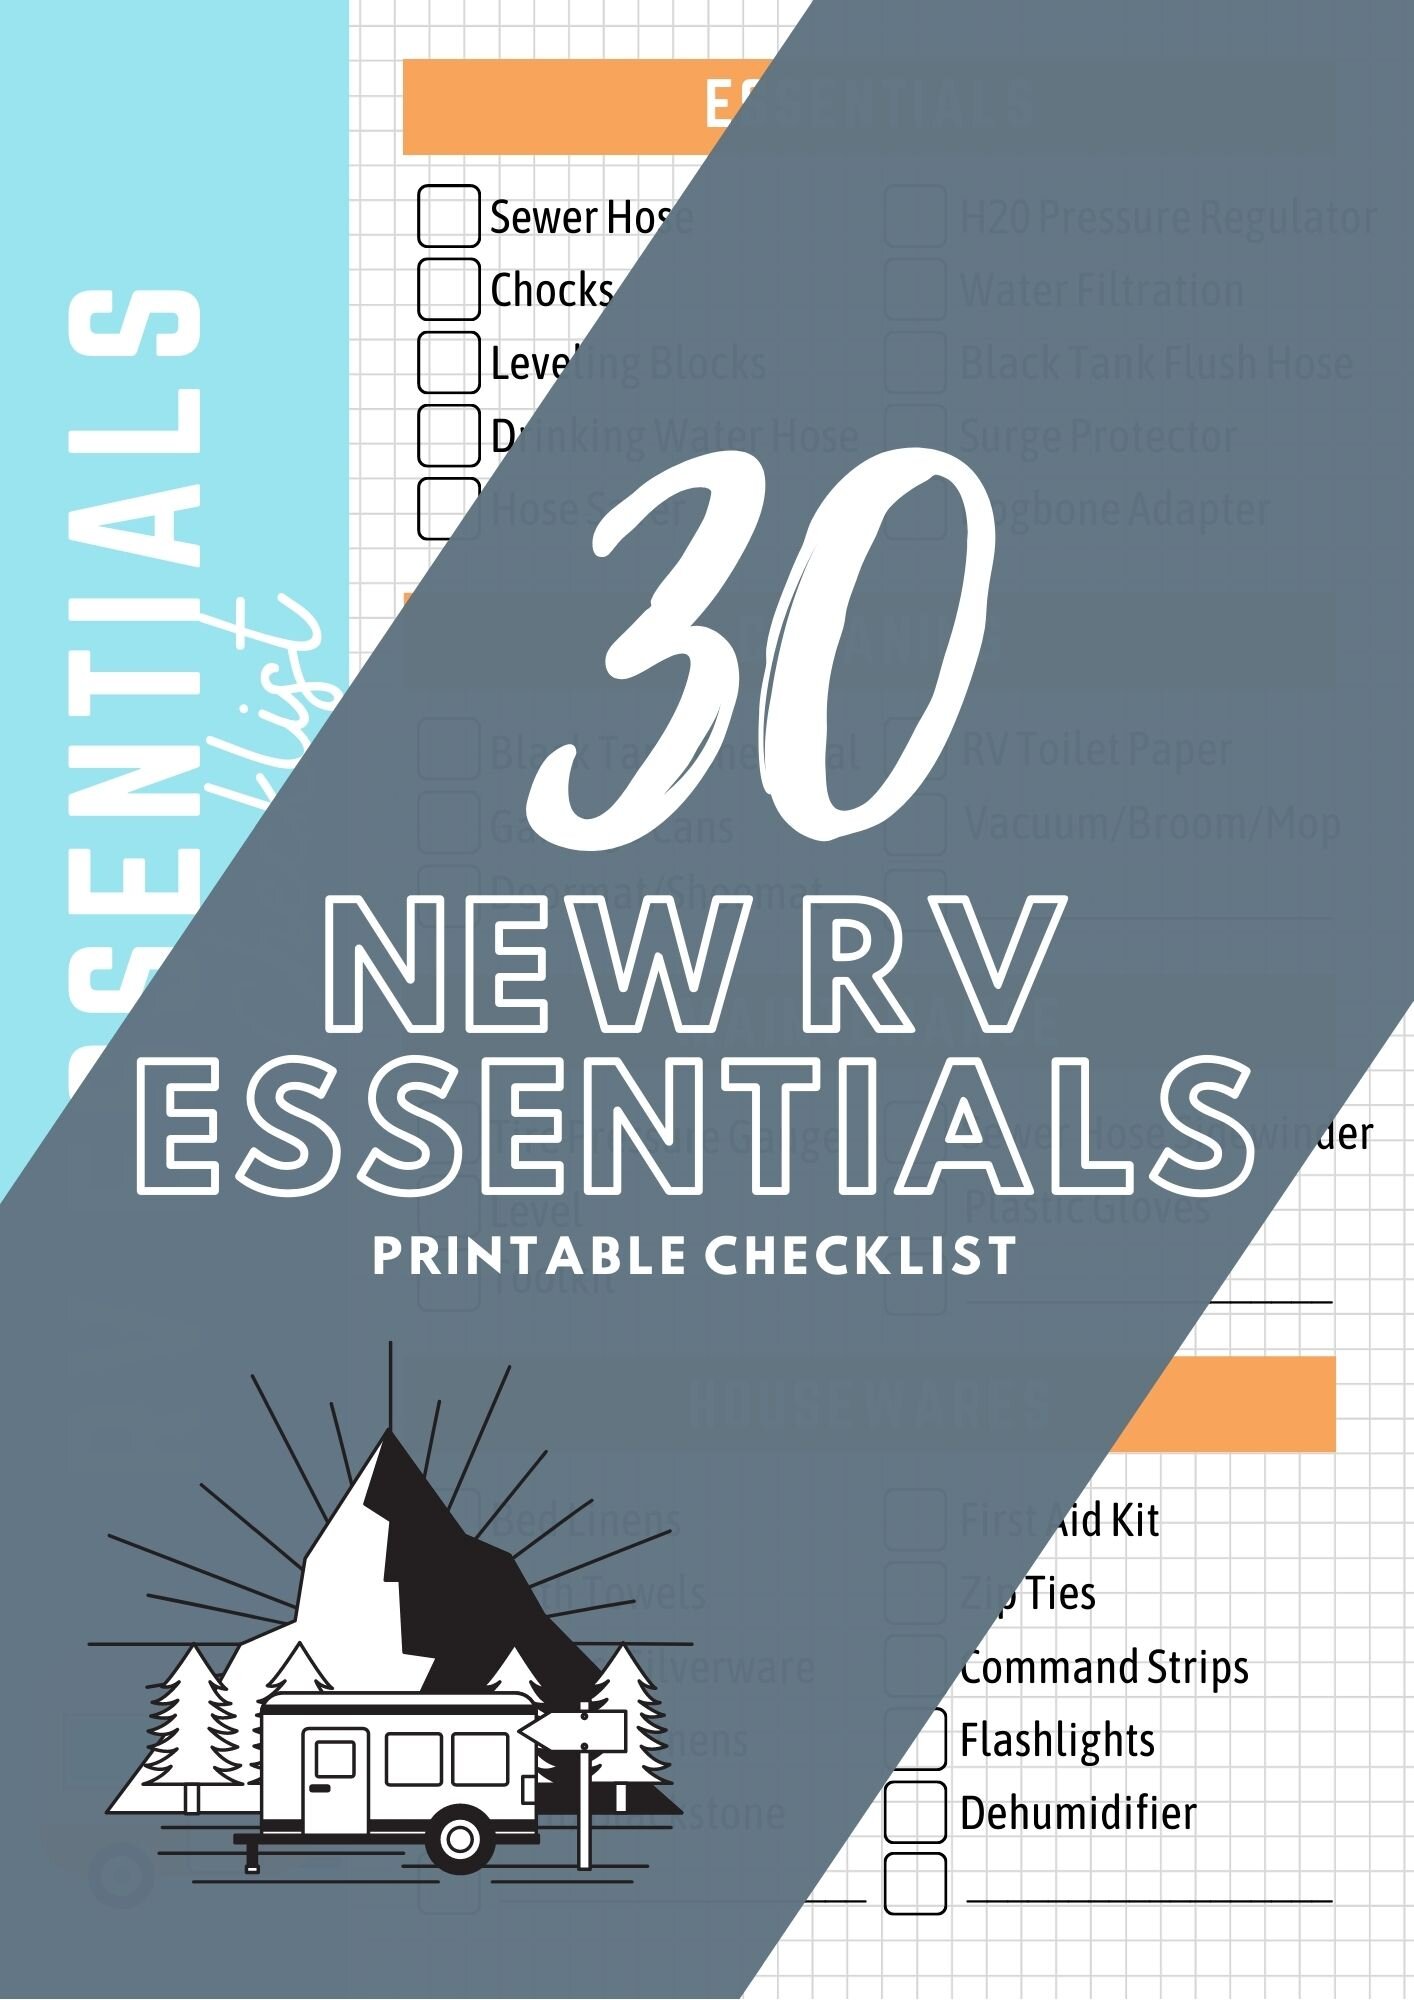 RV Essentials Checklist pdf.jpg